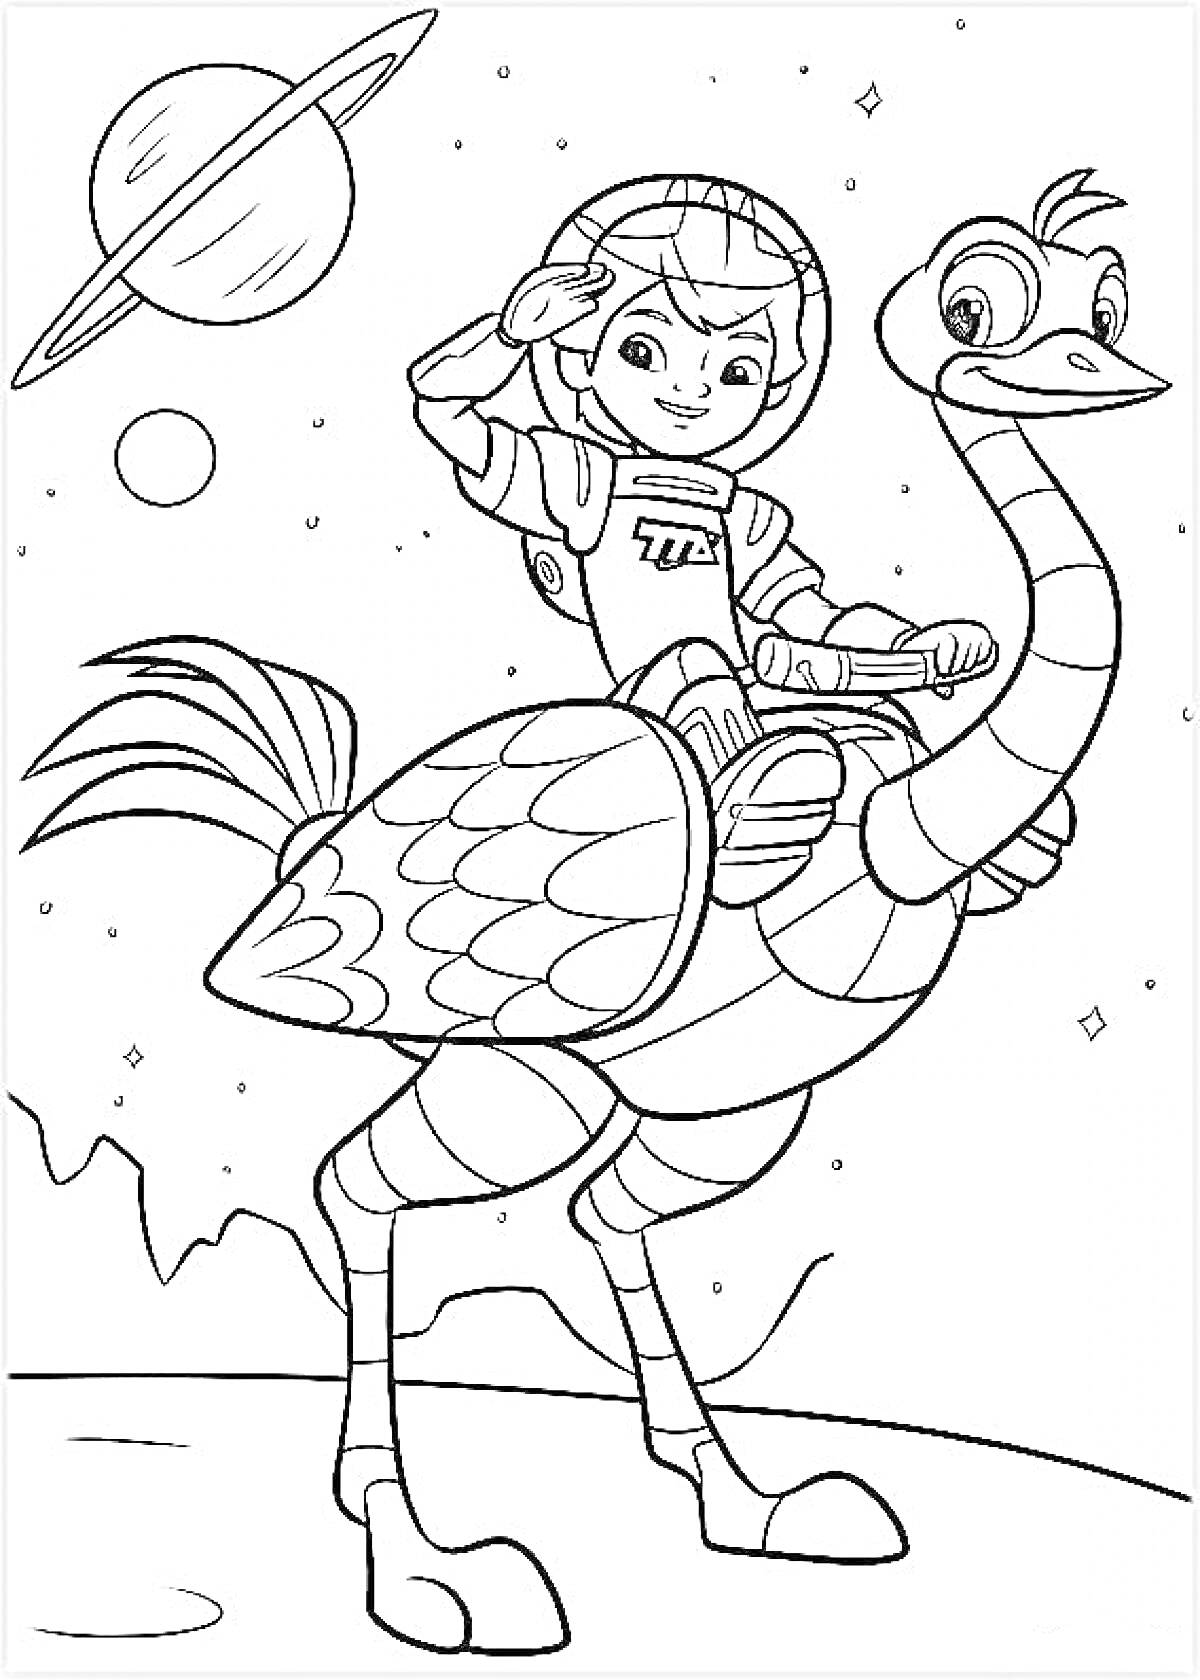 Раскраска Майлз в космическом костюме на механическом страусе на другой планете, на заднем плане планета и звезды